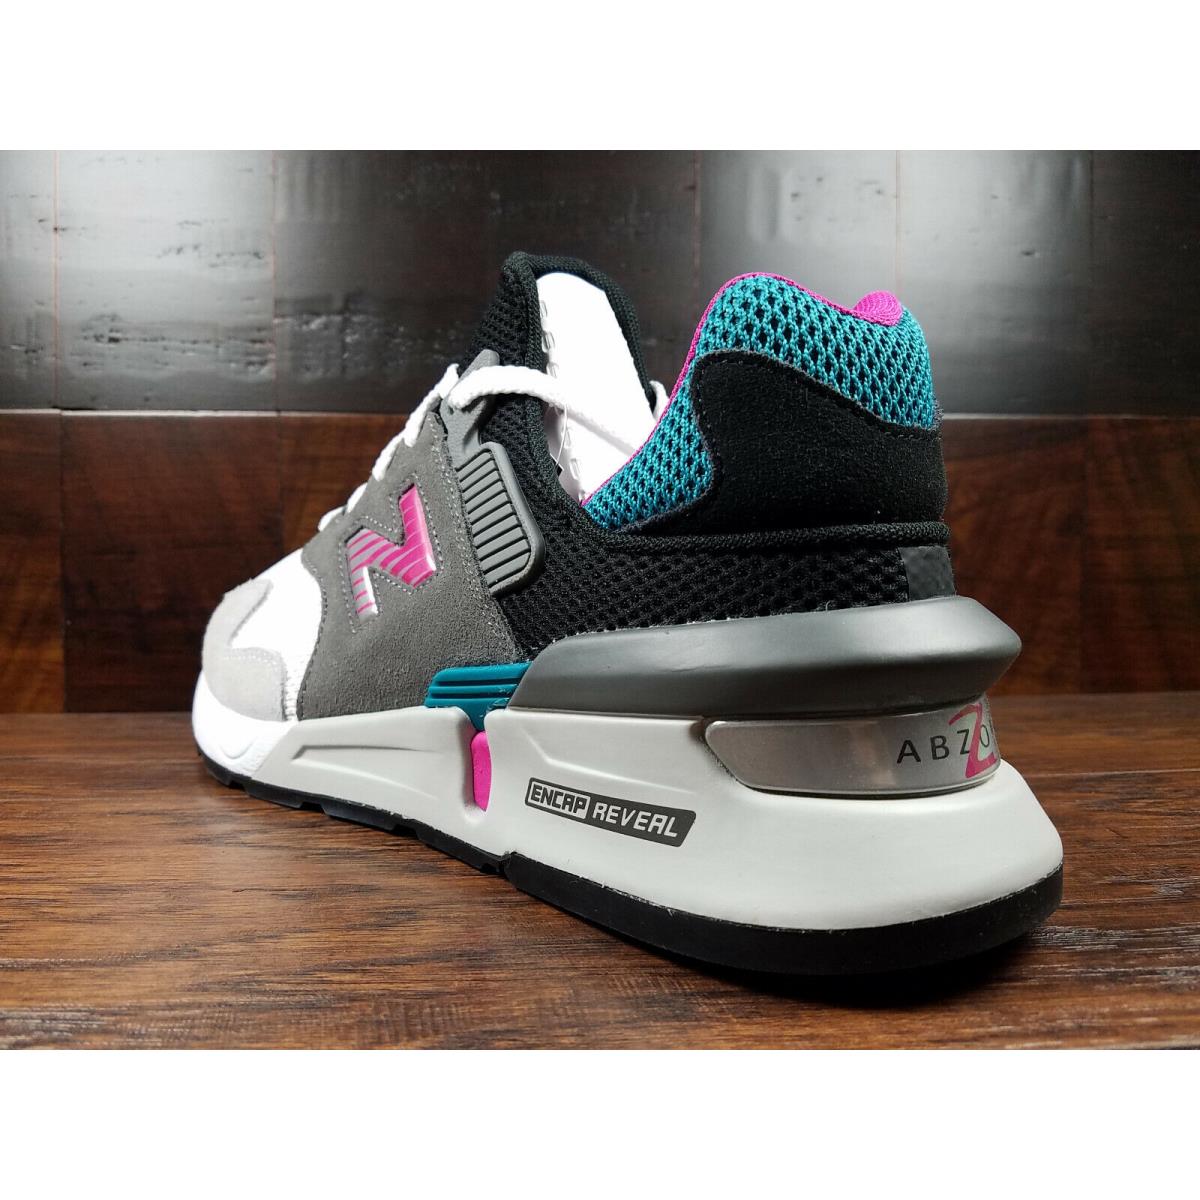 New Balance MS997JCF Sport Castle Grey / Amazon / Pink Suede 997 Mens 8-13 | 033436758245 - New Balance shoes - Castle Grey / Amazon / Pink |